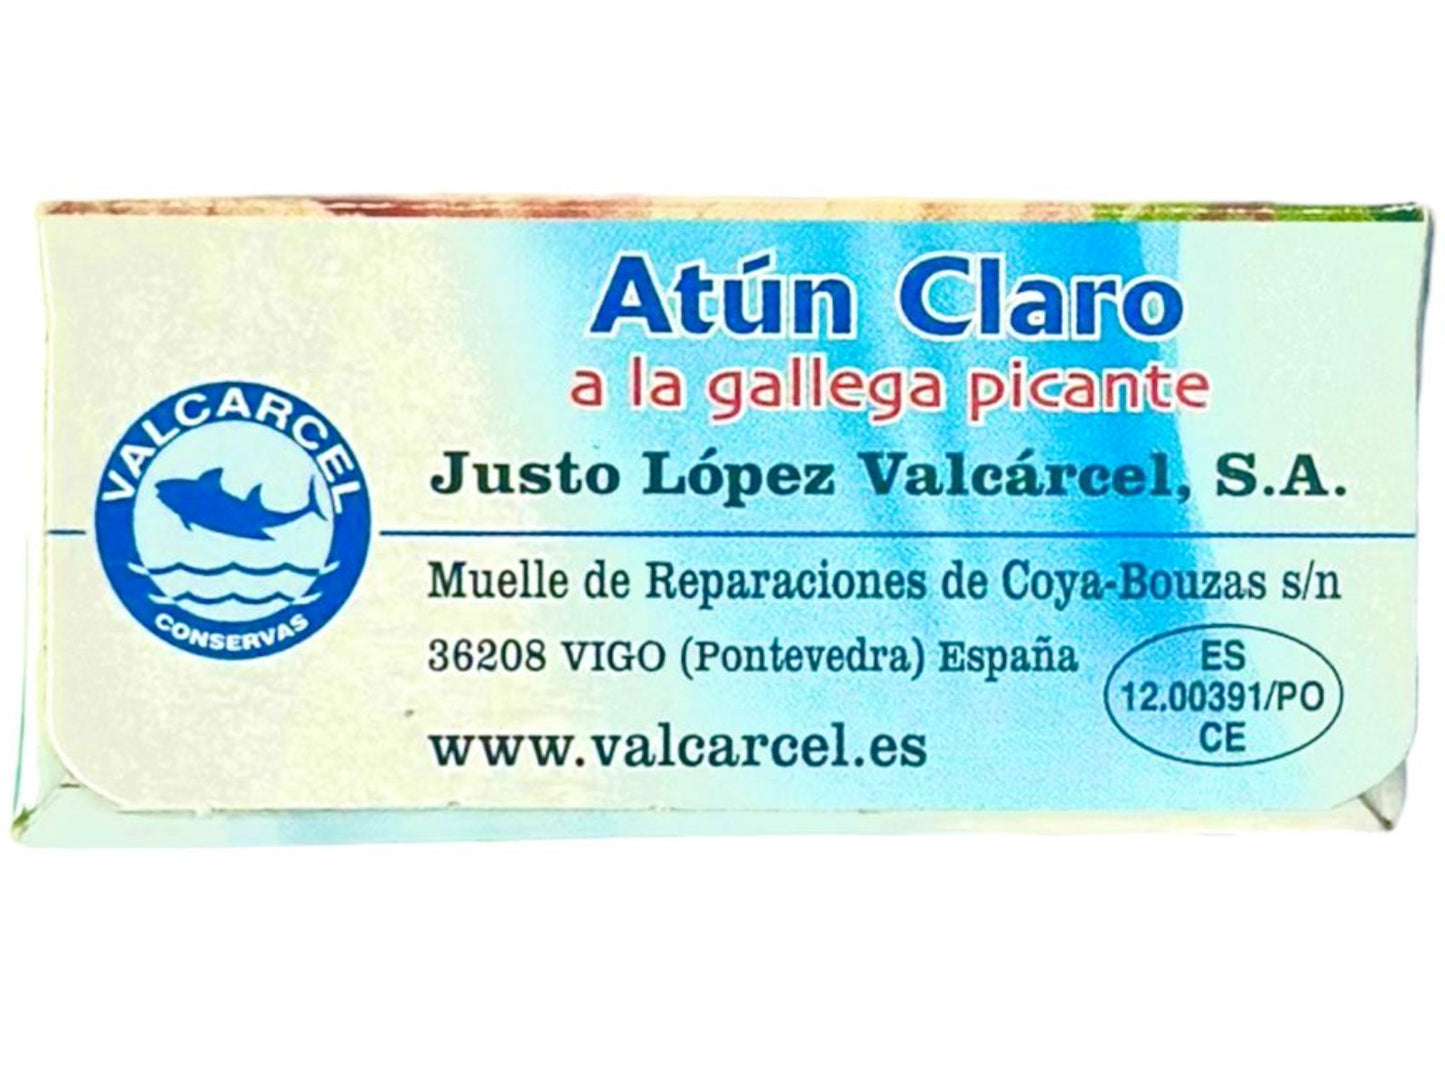 Vigilante Atun Claro a la Gallega Picante Spain - Yellowfin Tuna in Hot Galican Sauce 115g